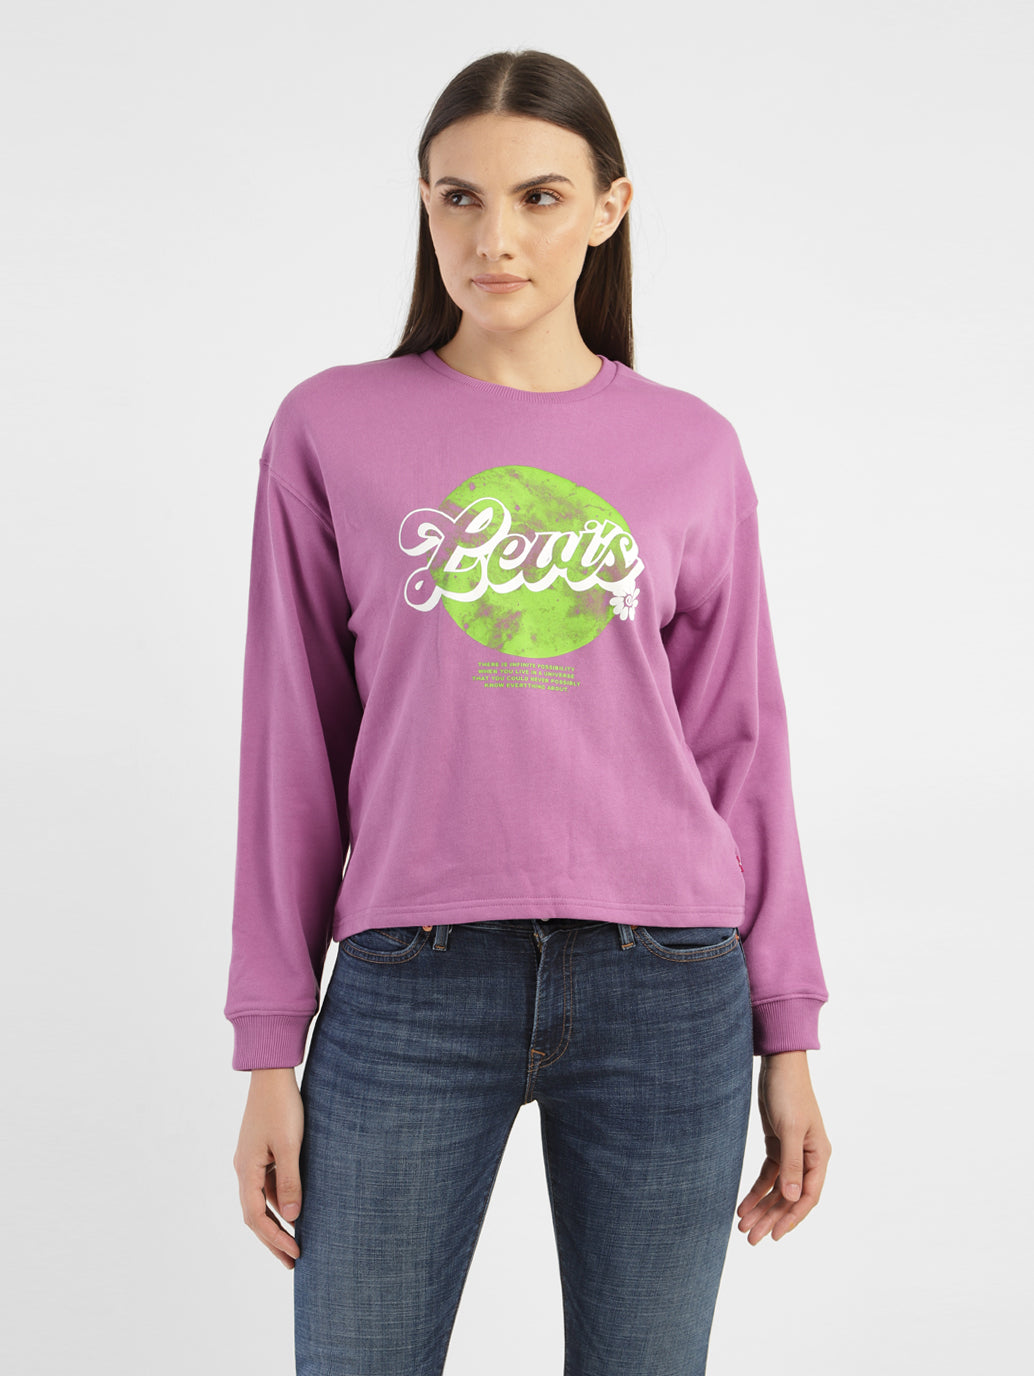 Women's Graphic Print Crew Neck Sweatshirt